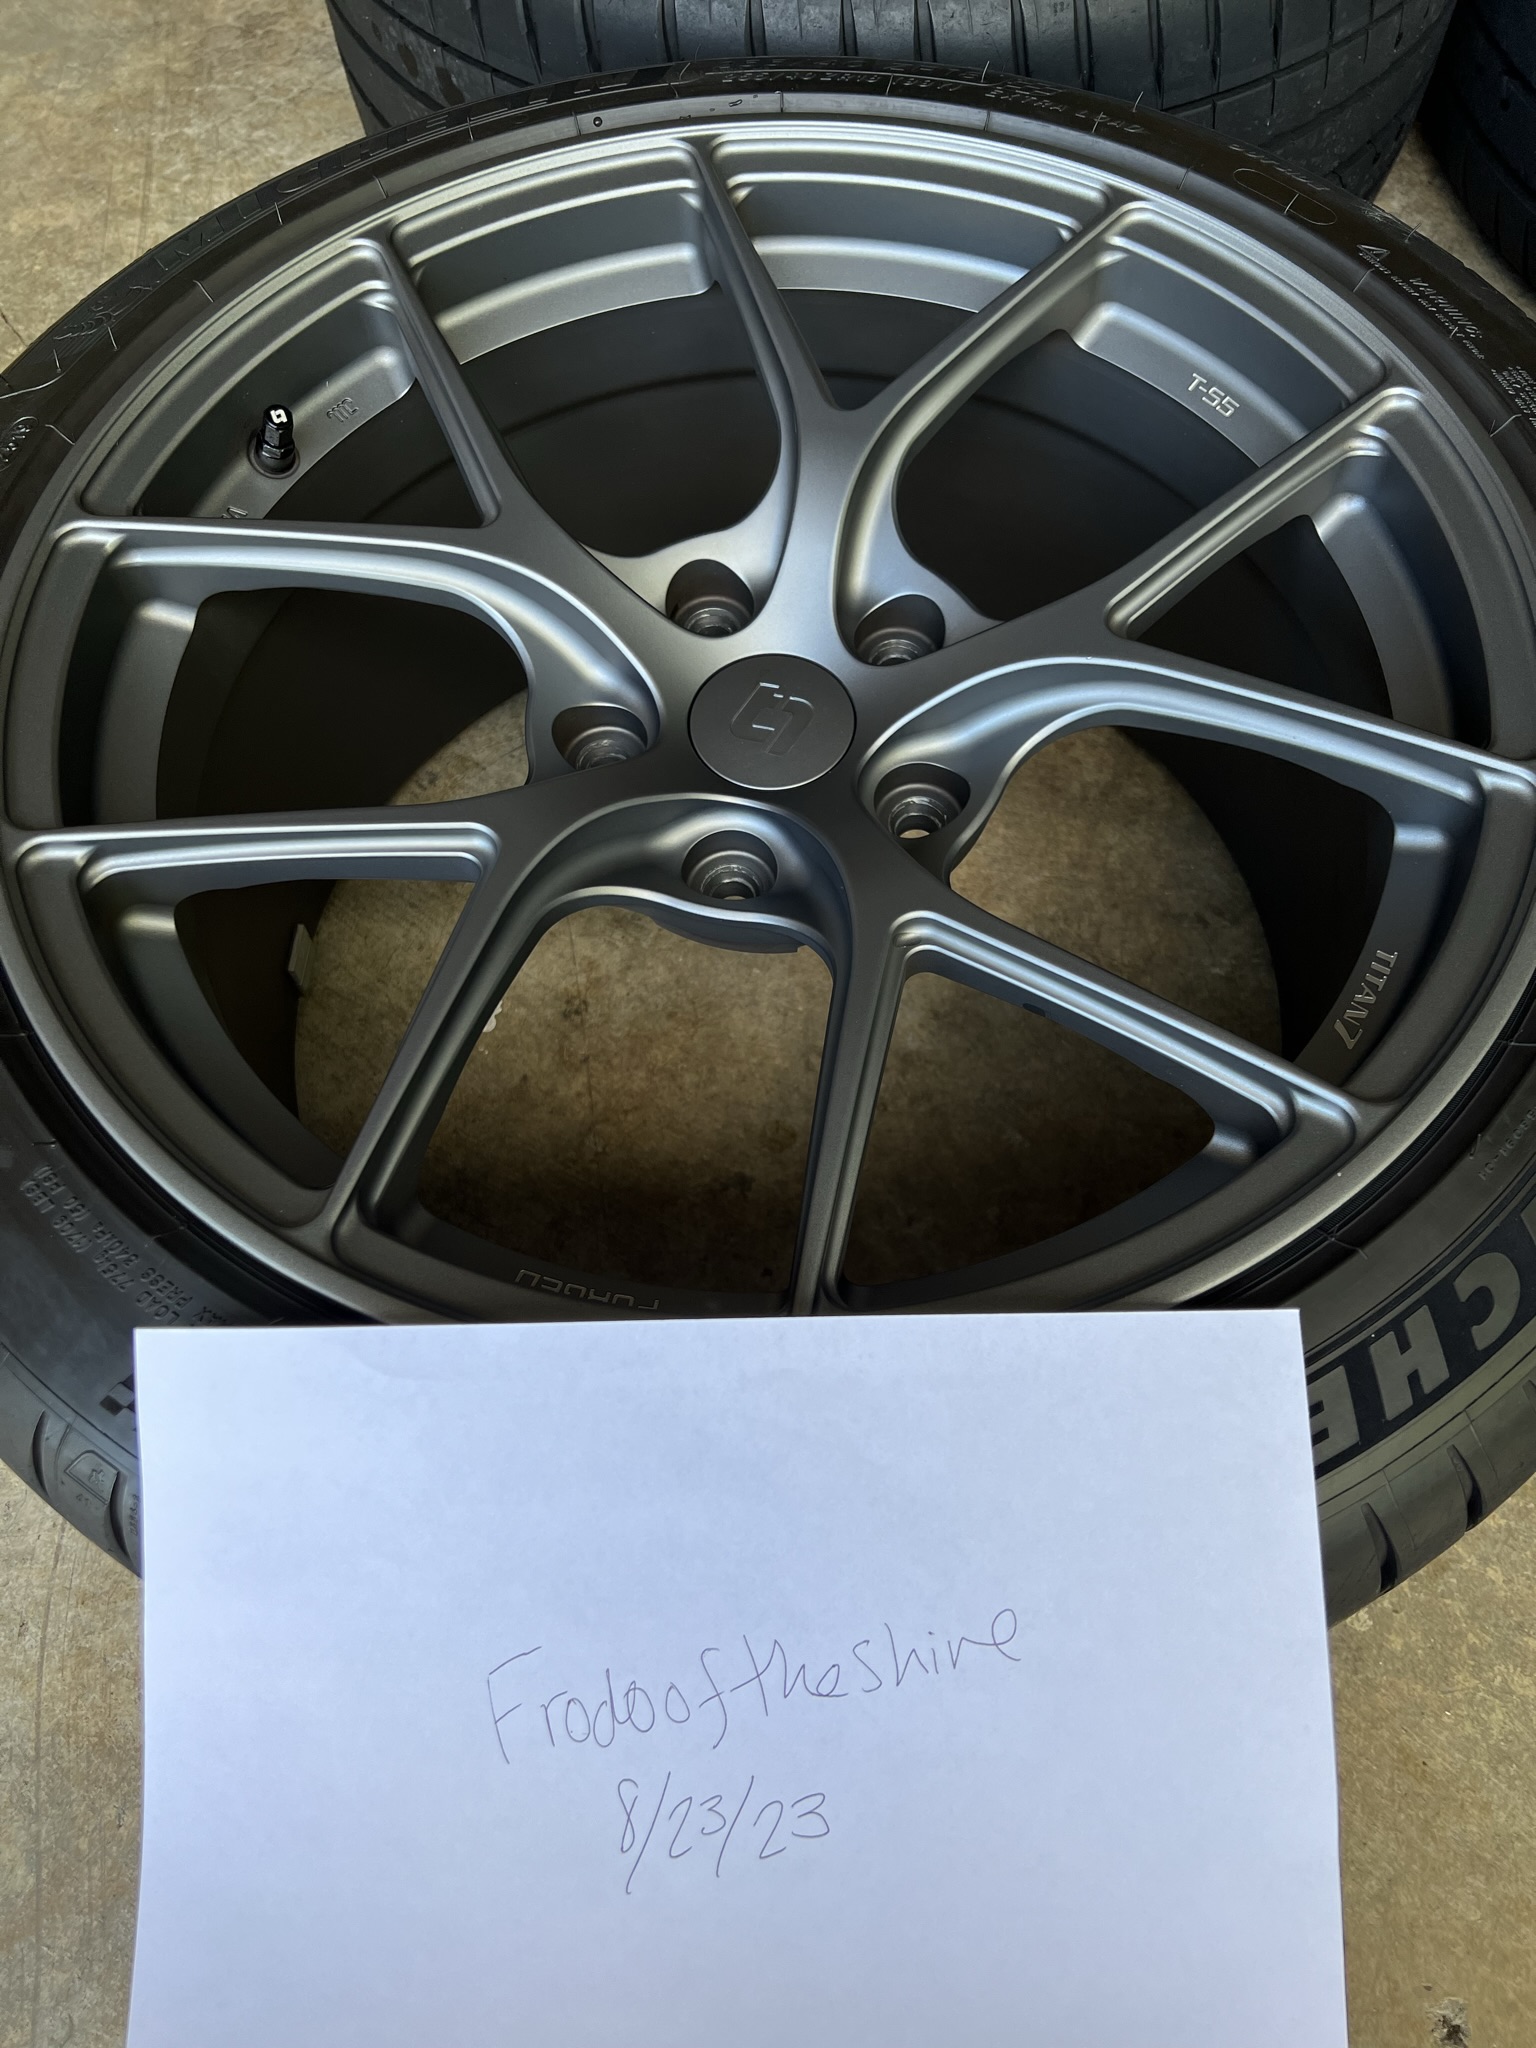 11th Gen Honda Civic Titan TS5 (Satin titanium) w/ titanium lug nuts + Michelin Pilot PS4s tires IMG_8470.JPEG